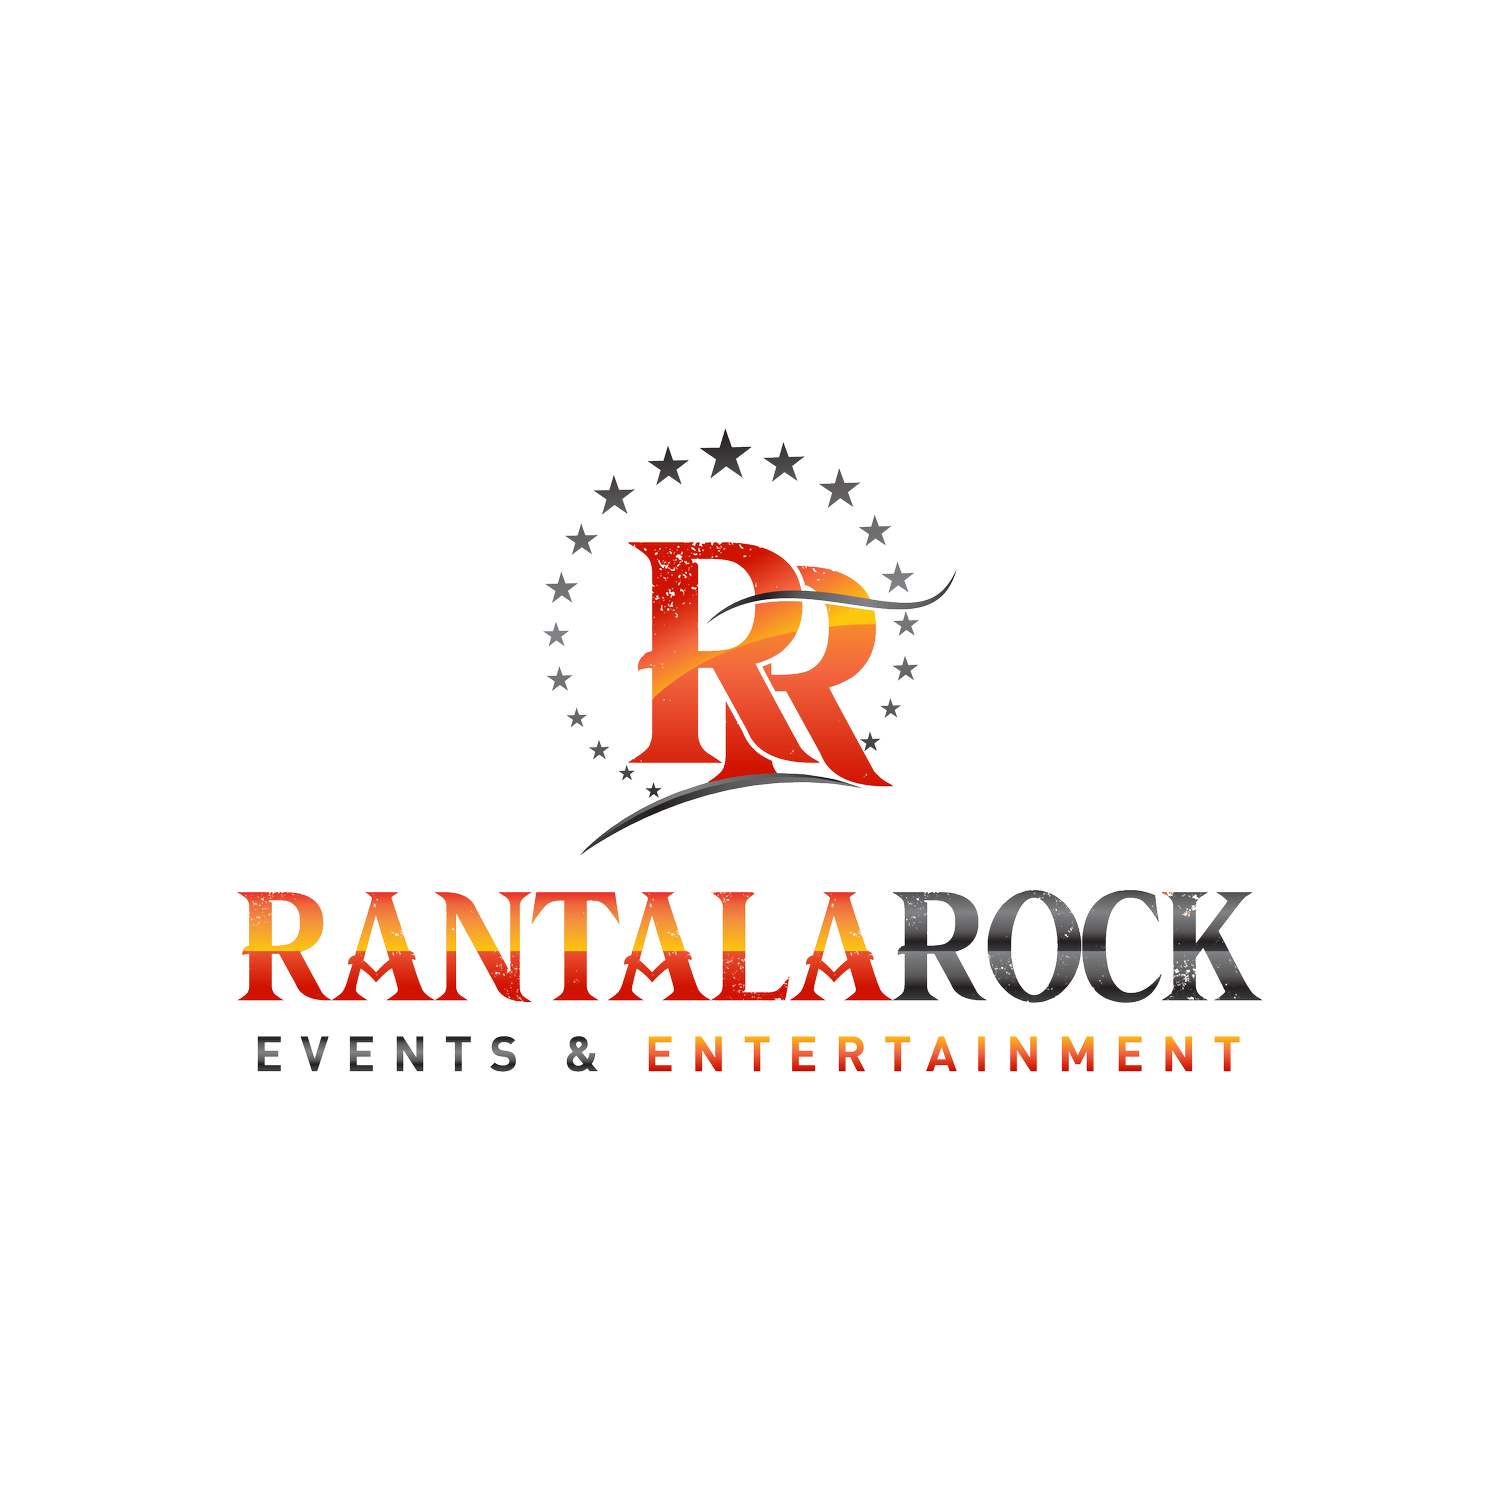 RantalaRock Events &amp; Entertainment Oy